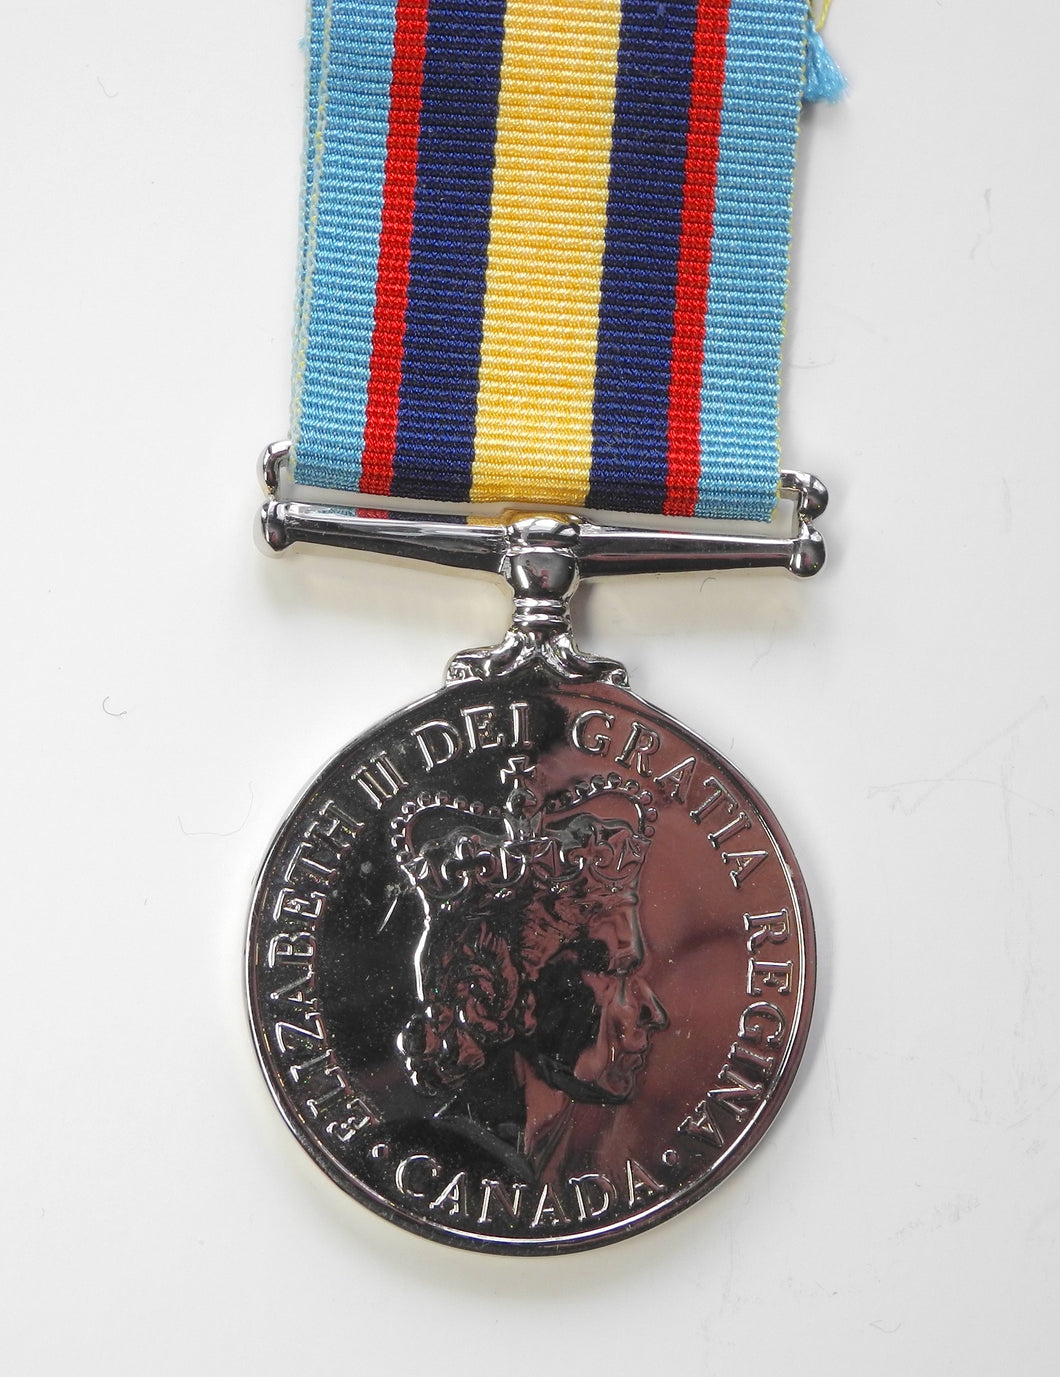 Canada: Gulf & Kuwait Medal 1990-1991